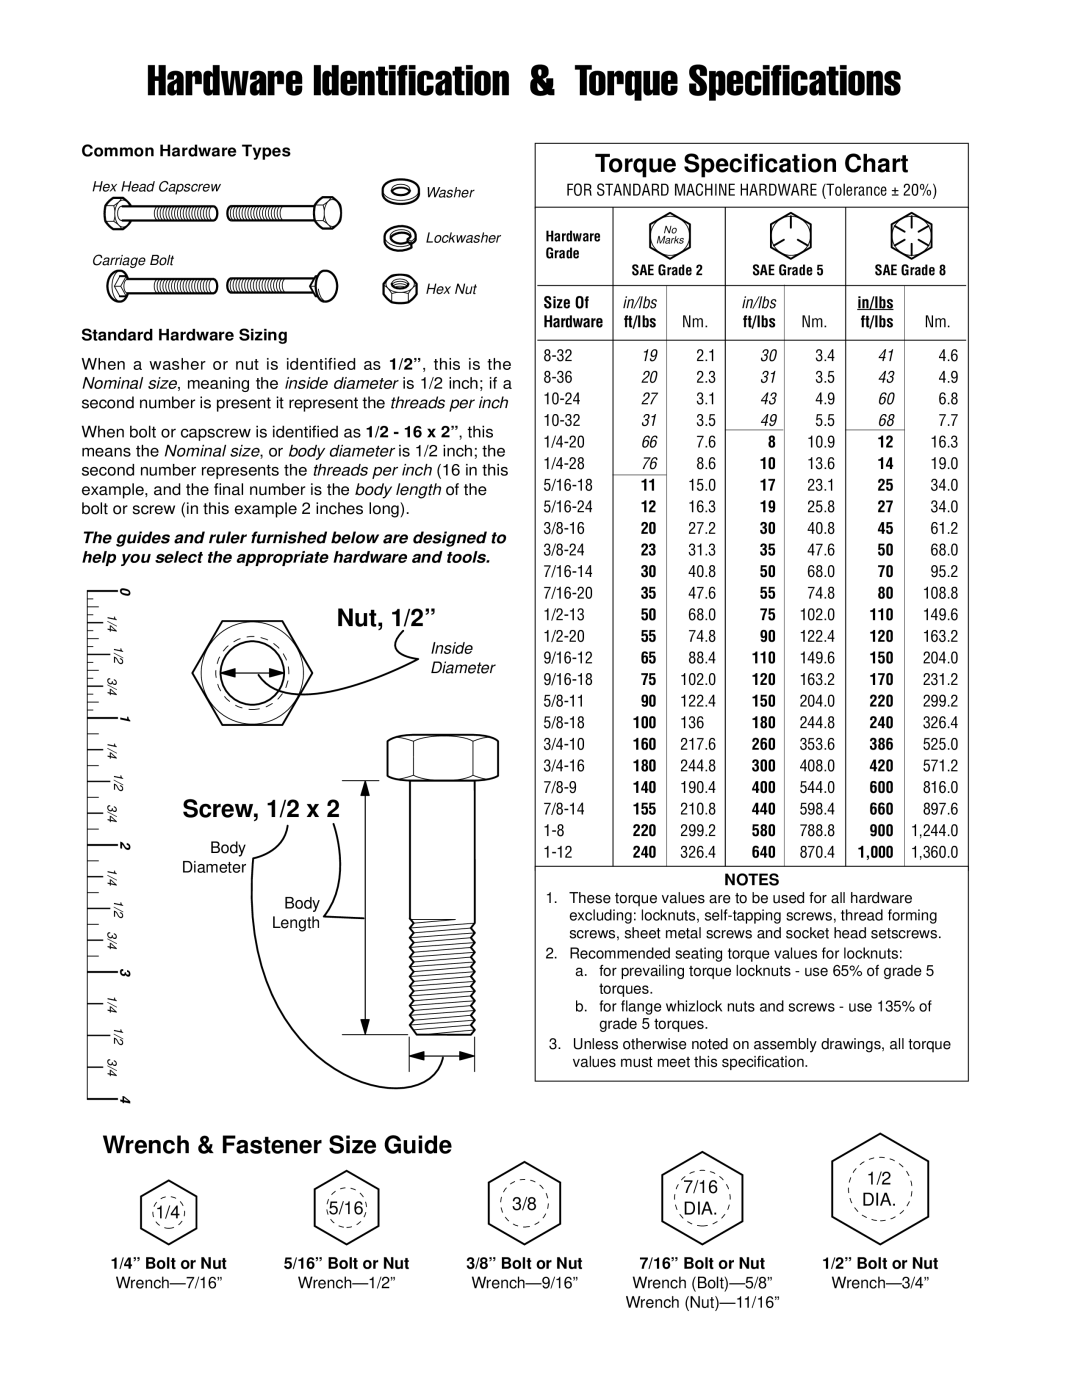 Snapper 2439 manual Hardware Identification & Torque Specifications, Torque Specification Chart, Nut, 1/2”, Screw, 1/2 